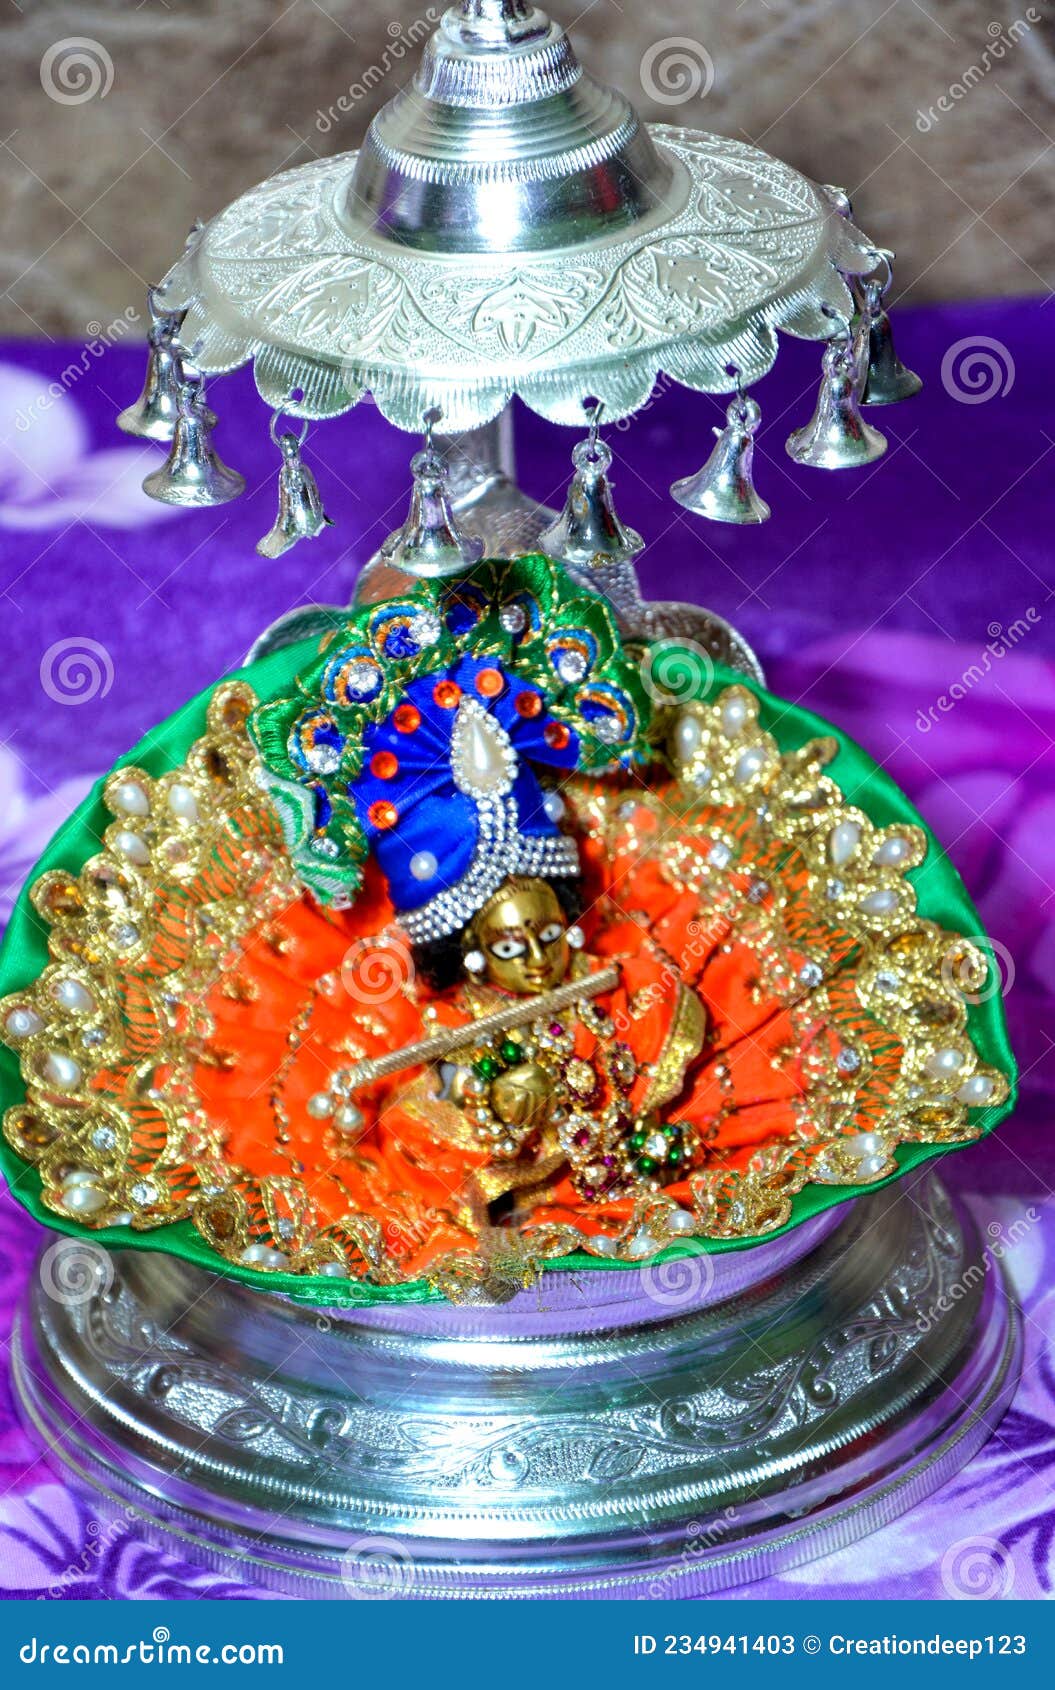 Lord Krishna Also Known As Laddu Gopal Sculpture in Beautiful ...